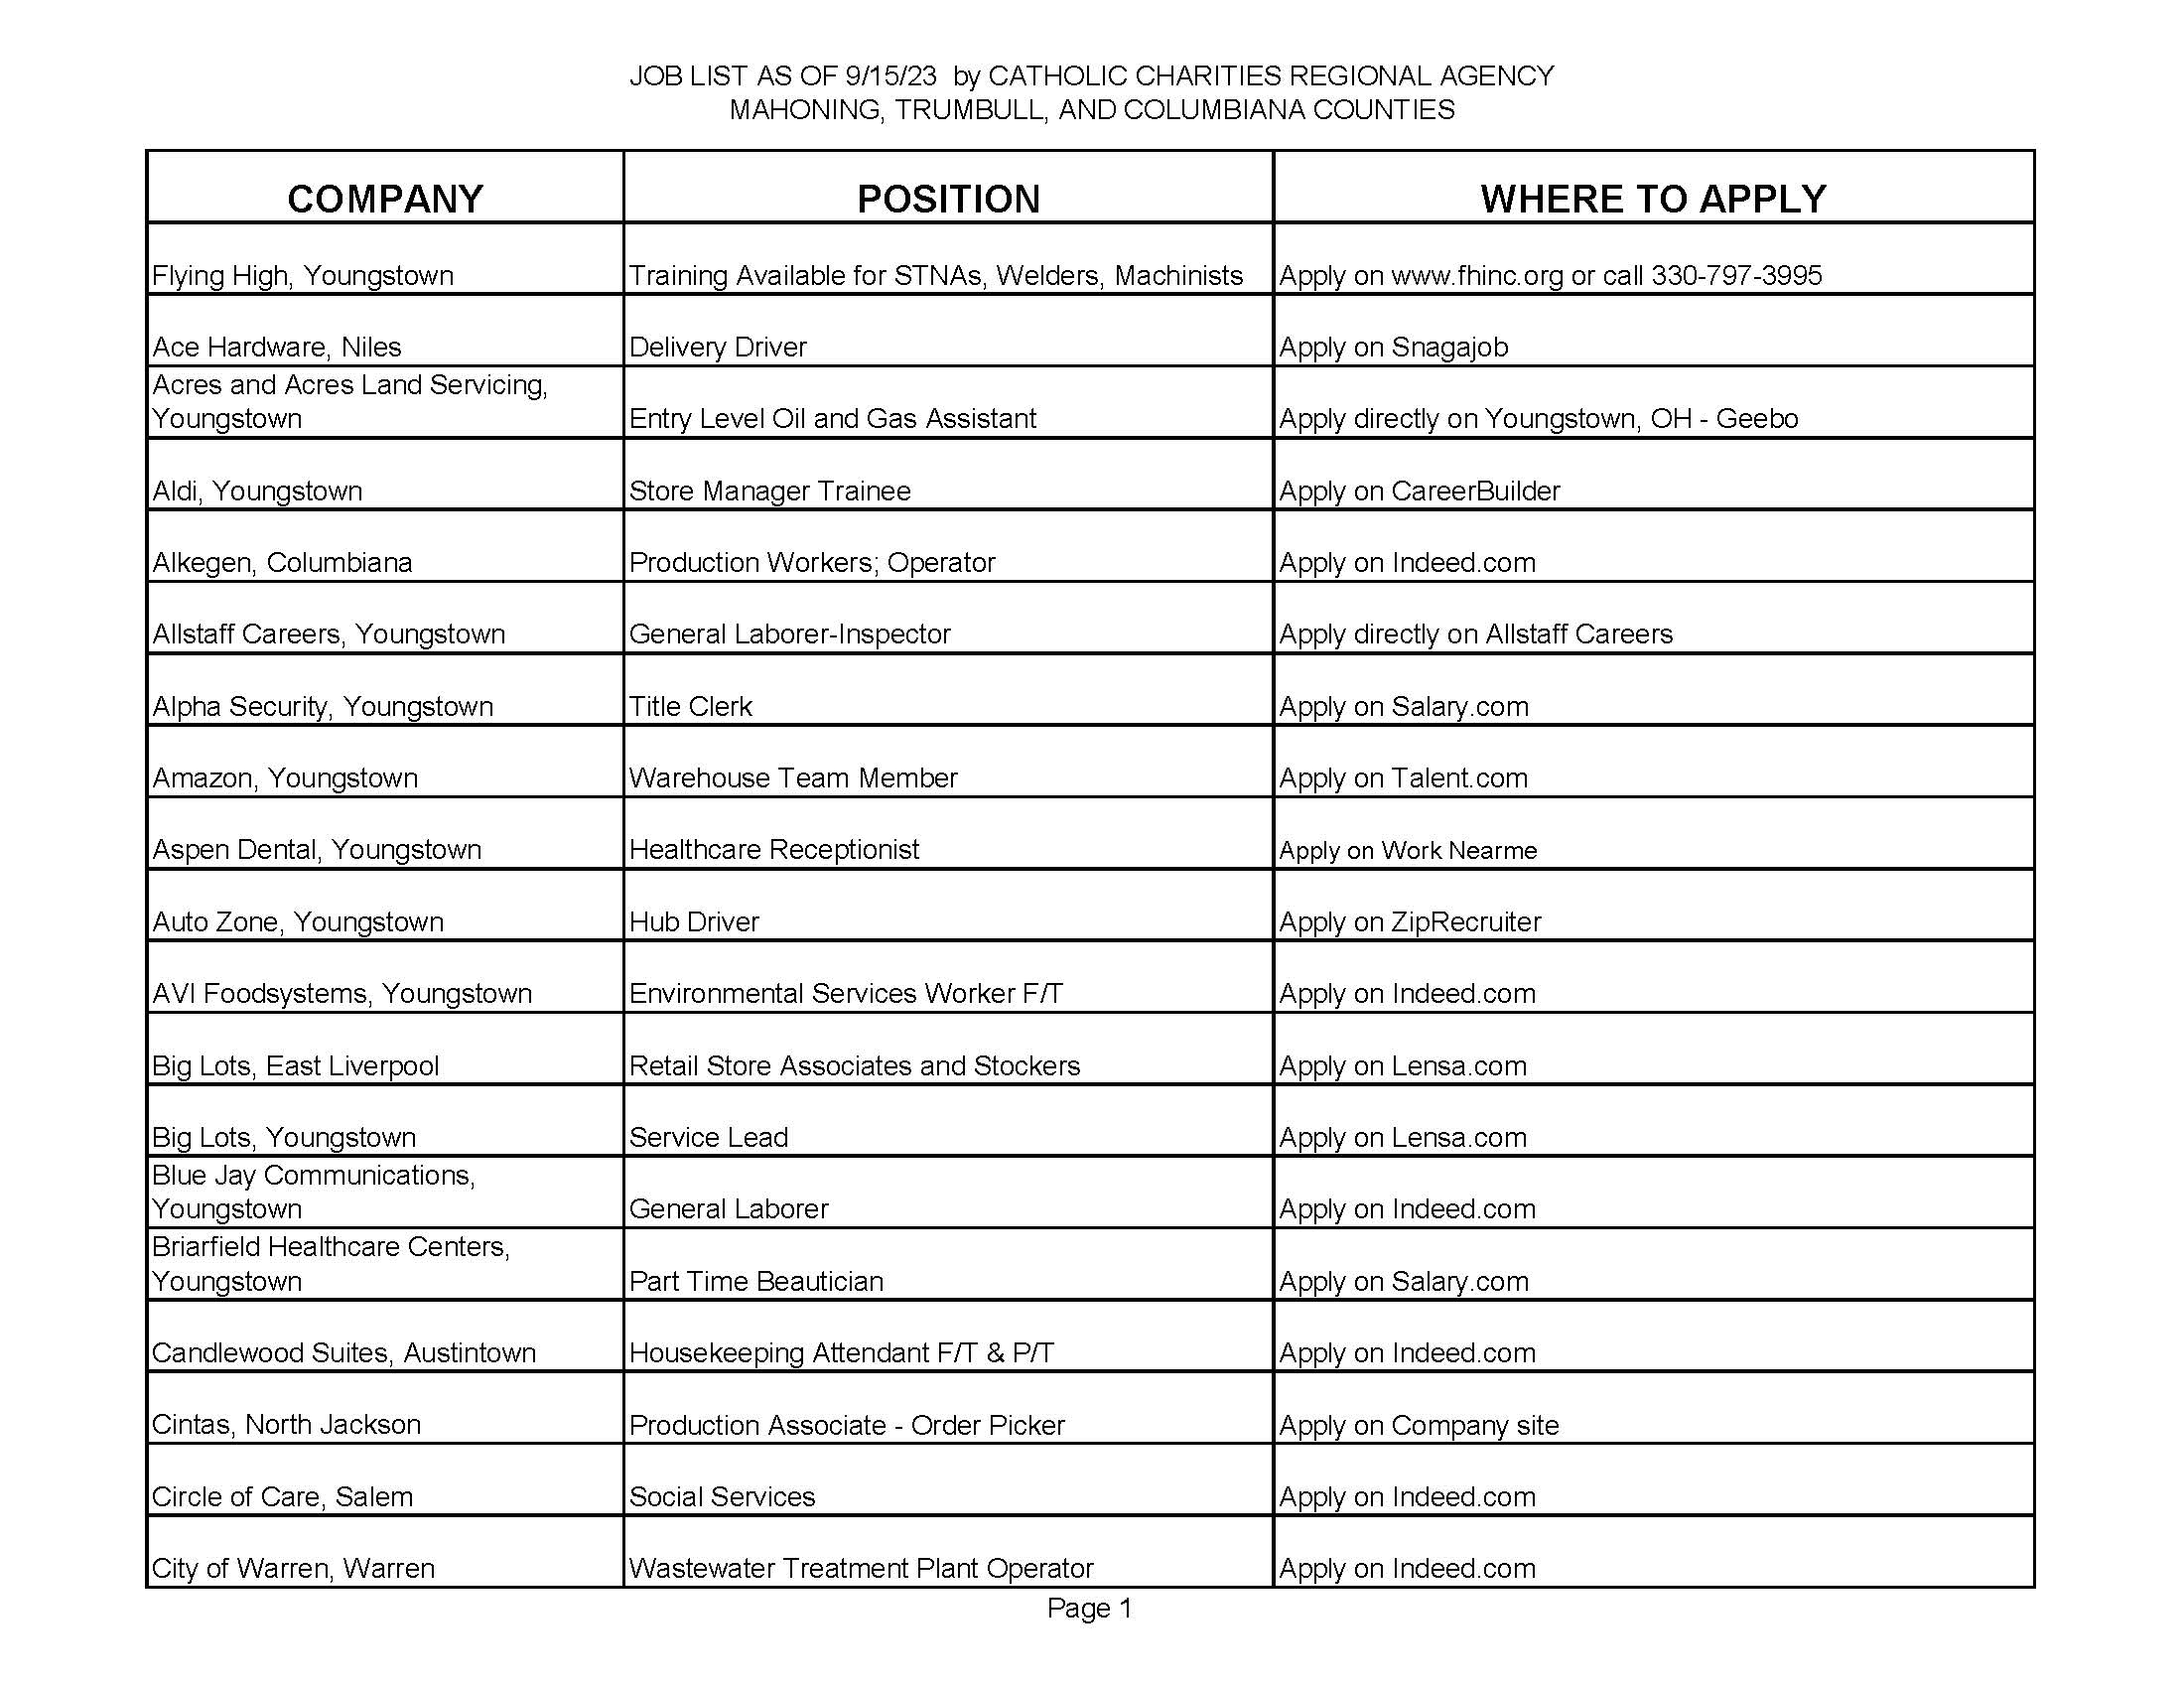 Jobs List page 1